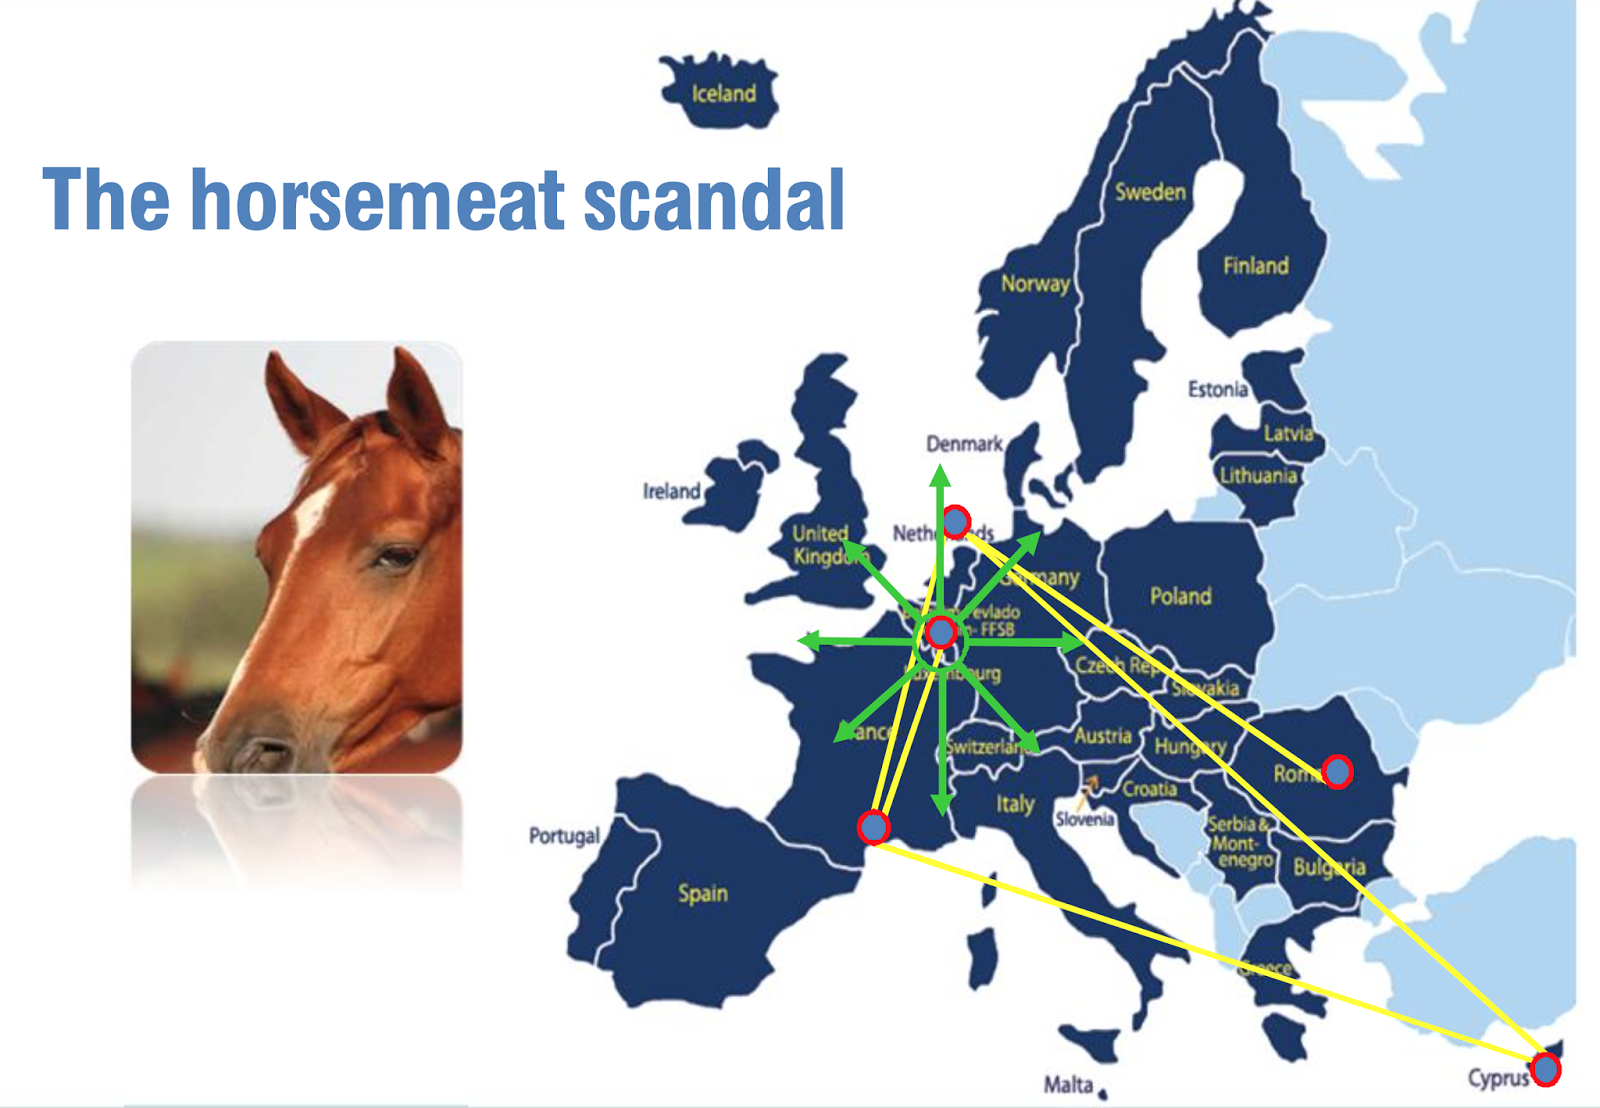 2013 at eti skandalı, 2013 horse meat scandal, 2013 tete tağşiş, horsemeat scandal